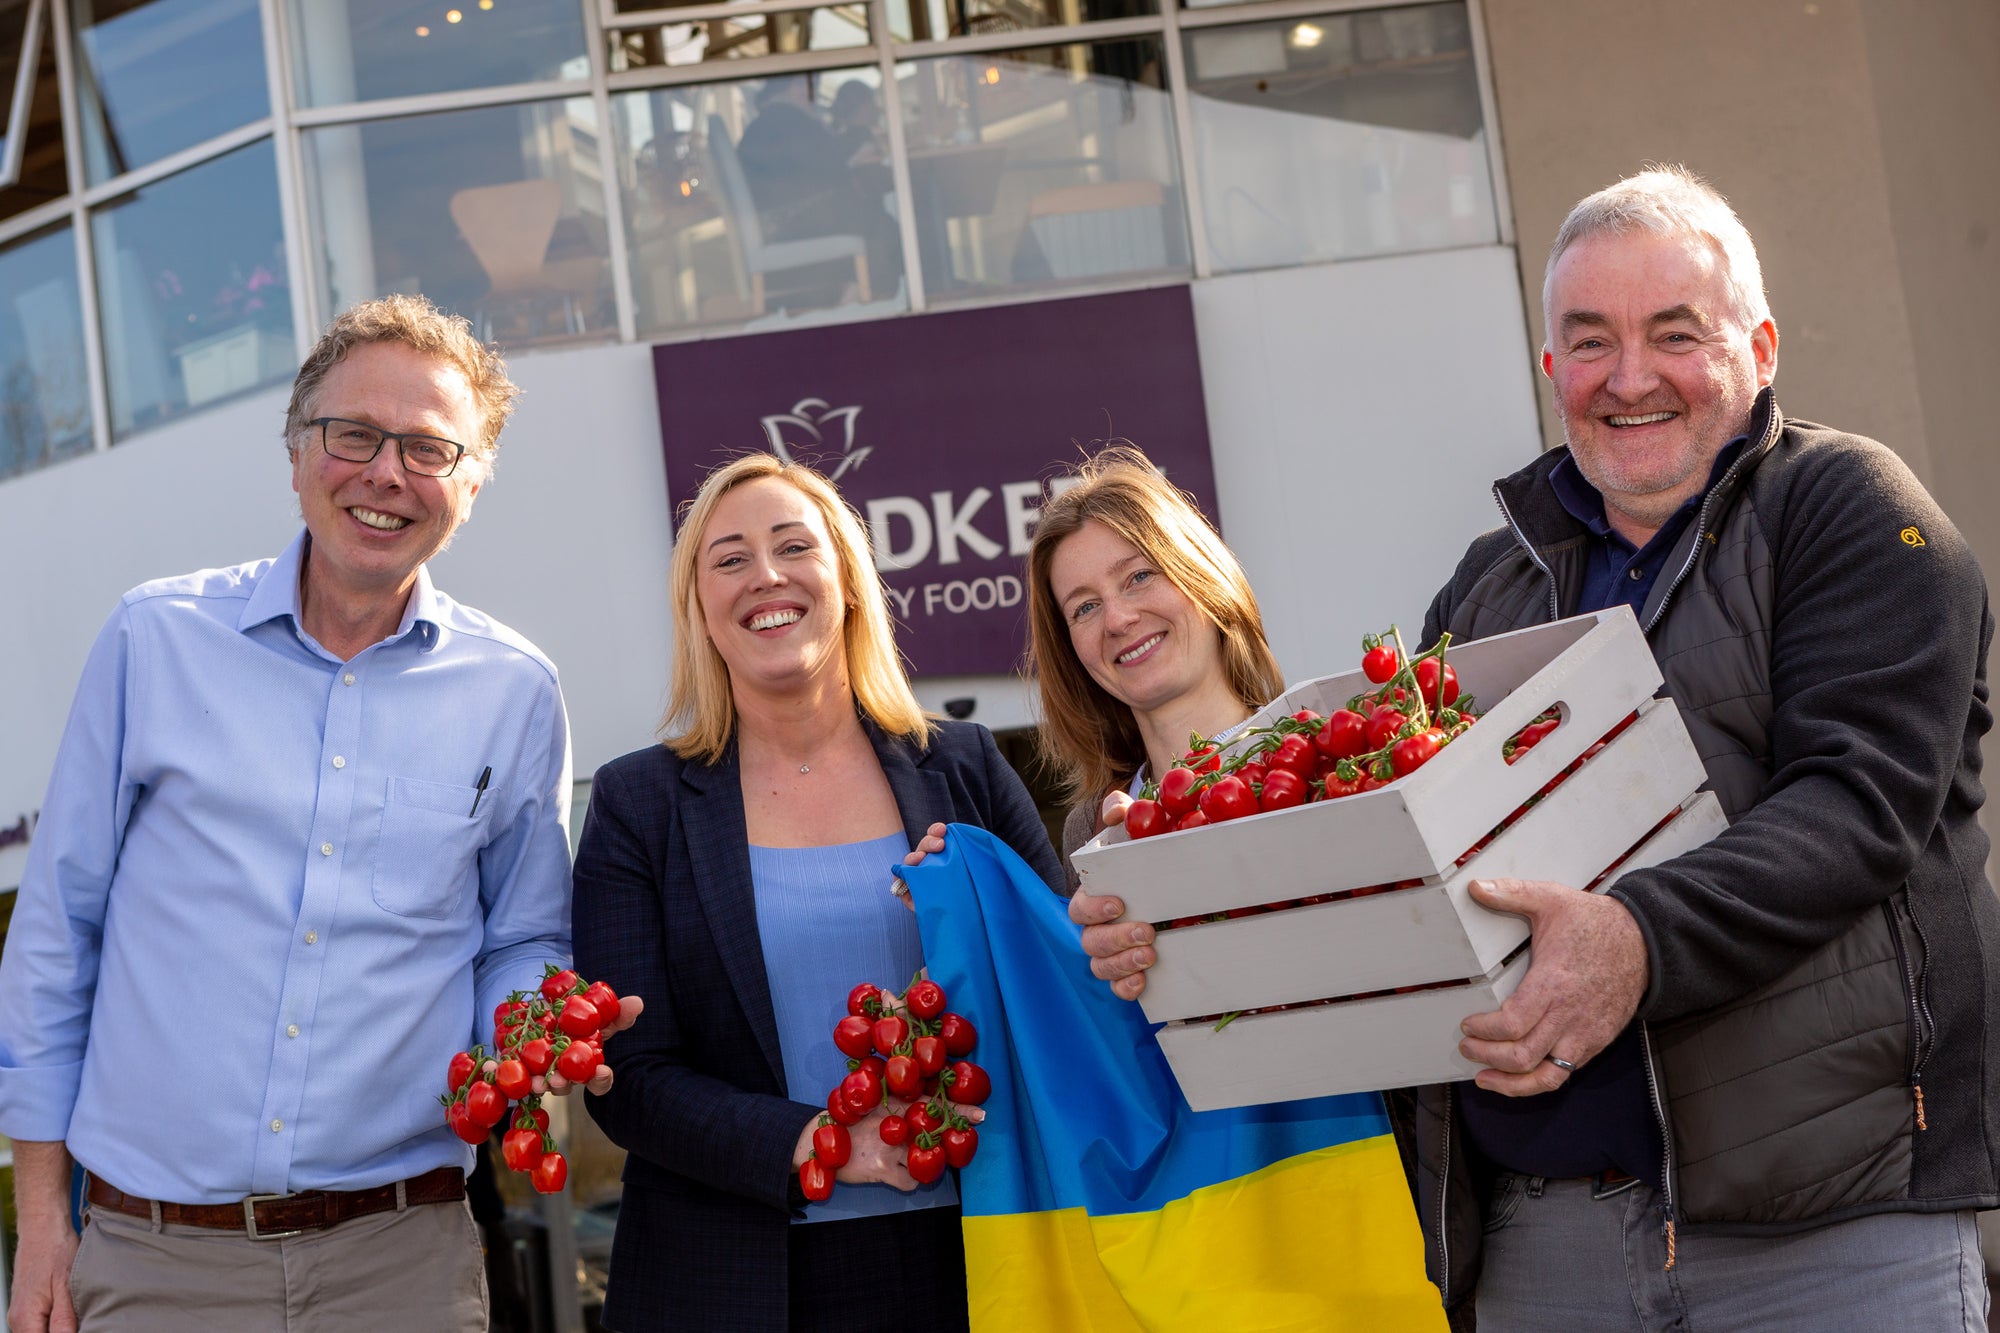 local tomatoes raising money for Ukraine appeal.